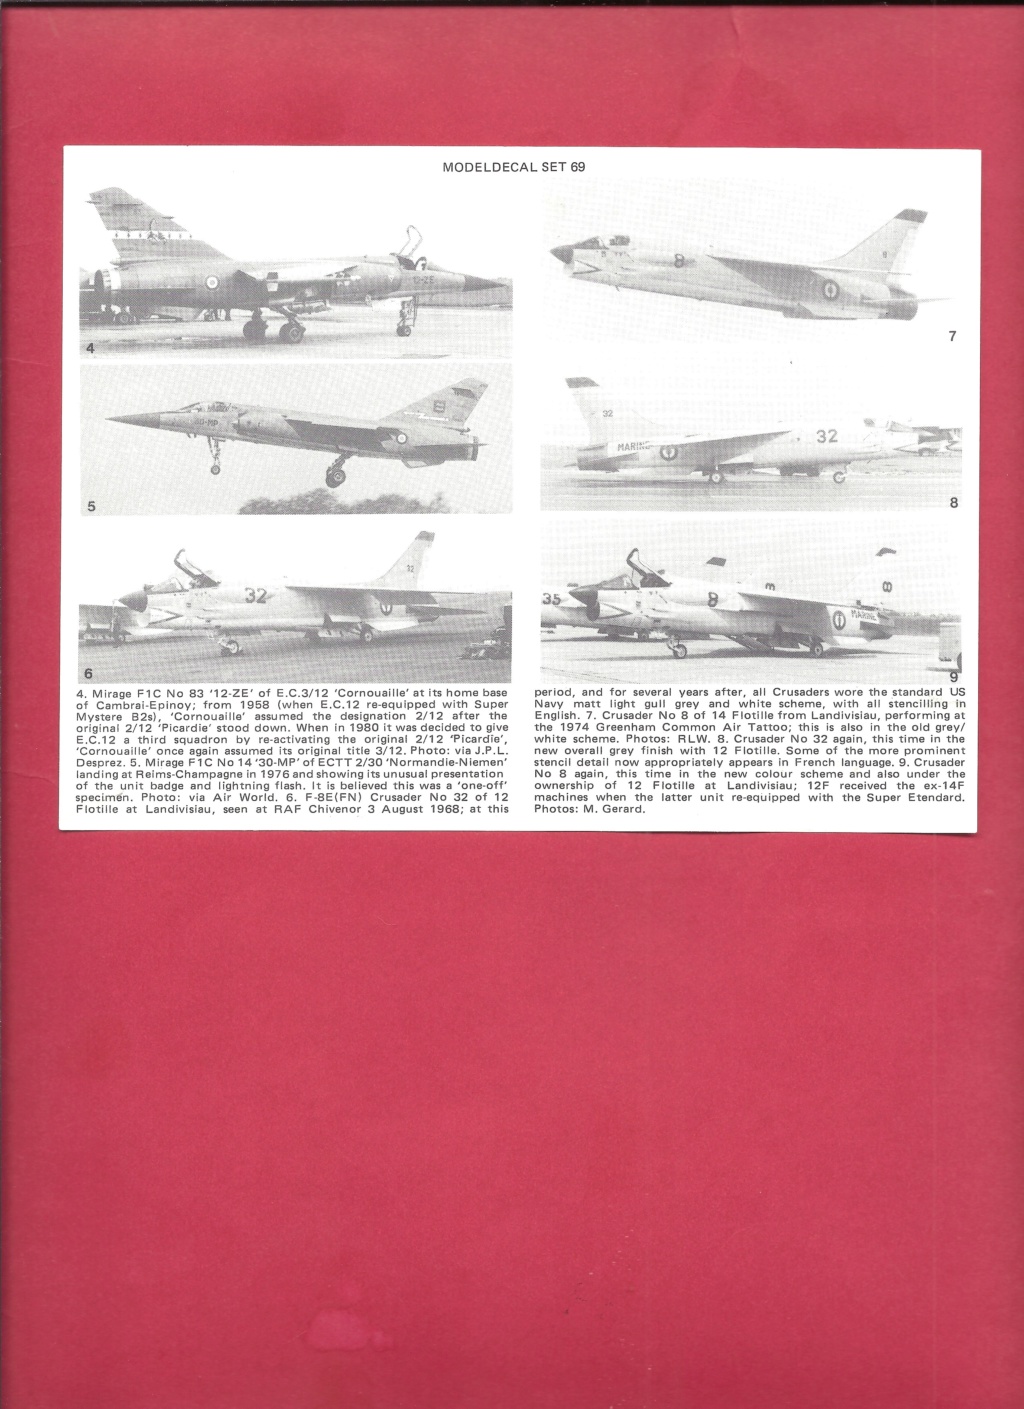 [MODELDECAL] Planche de décals F 100D/F SUPER SABRE, MIRAGE F 1C/B F 8E  & CRUSADER Réf 69 1/72ème Modeld19